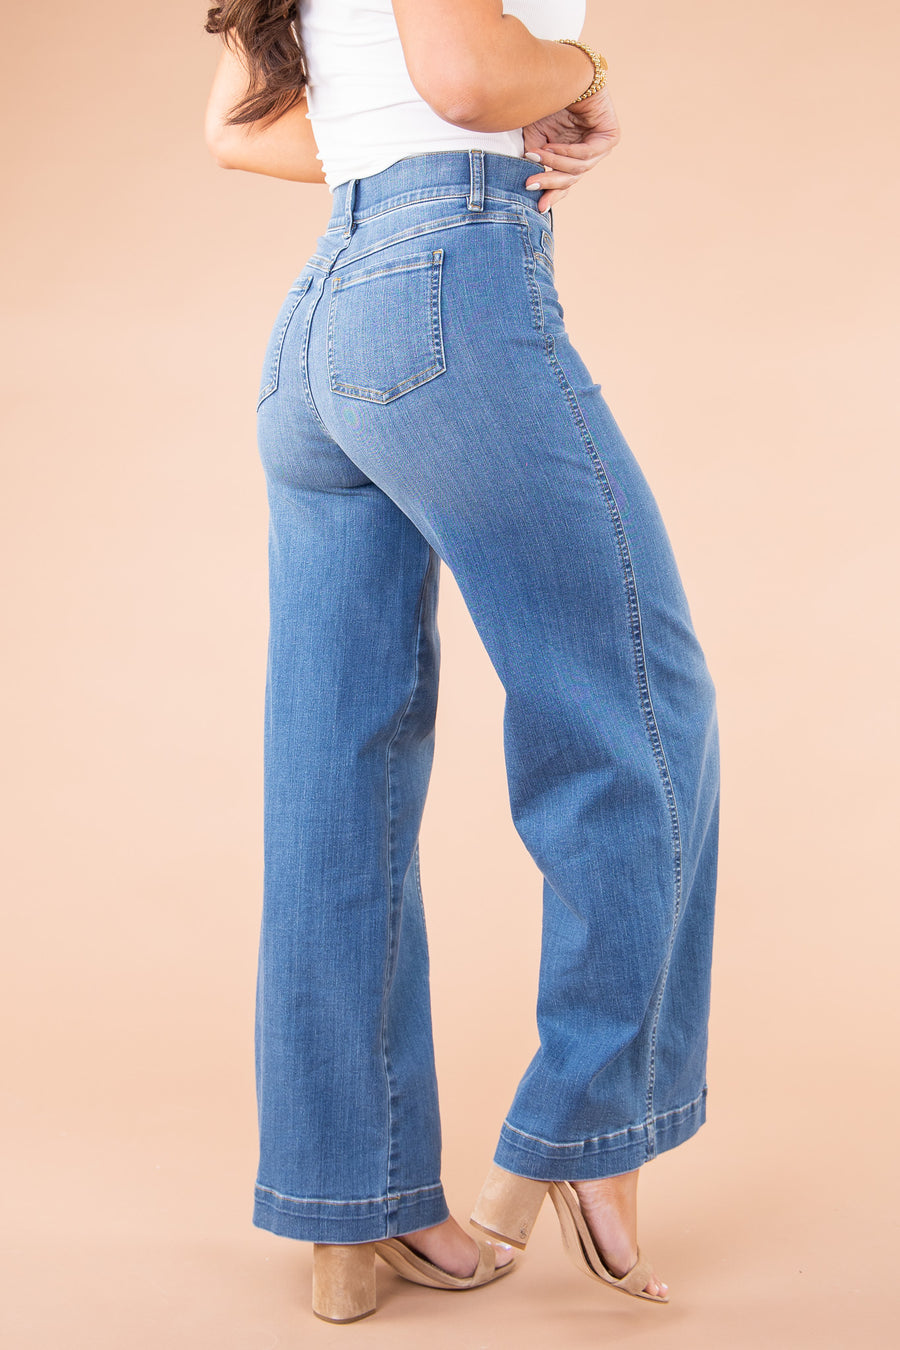 Wide-Legged Jeans, Not Picky Body Type